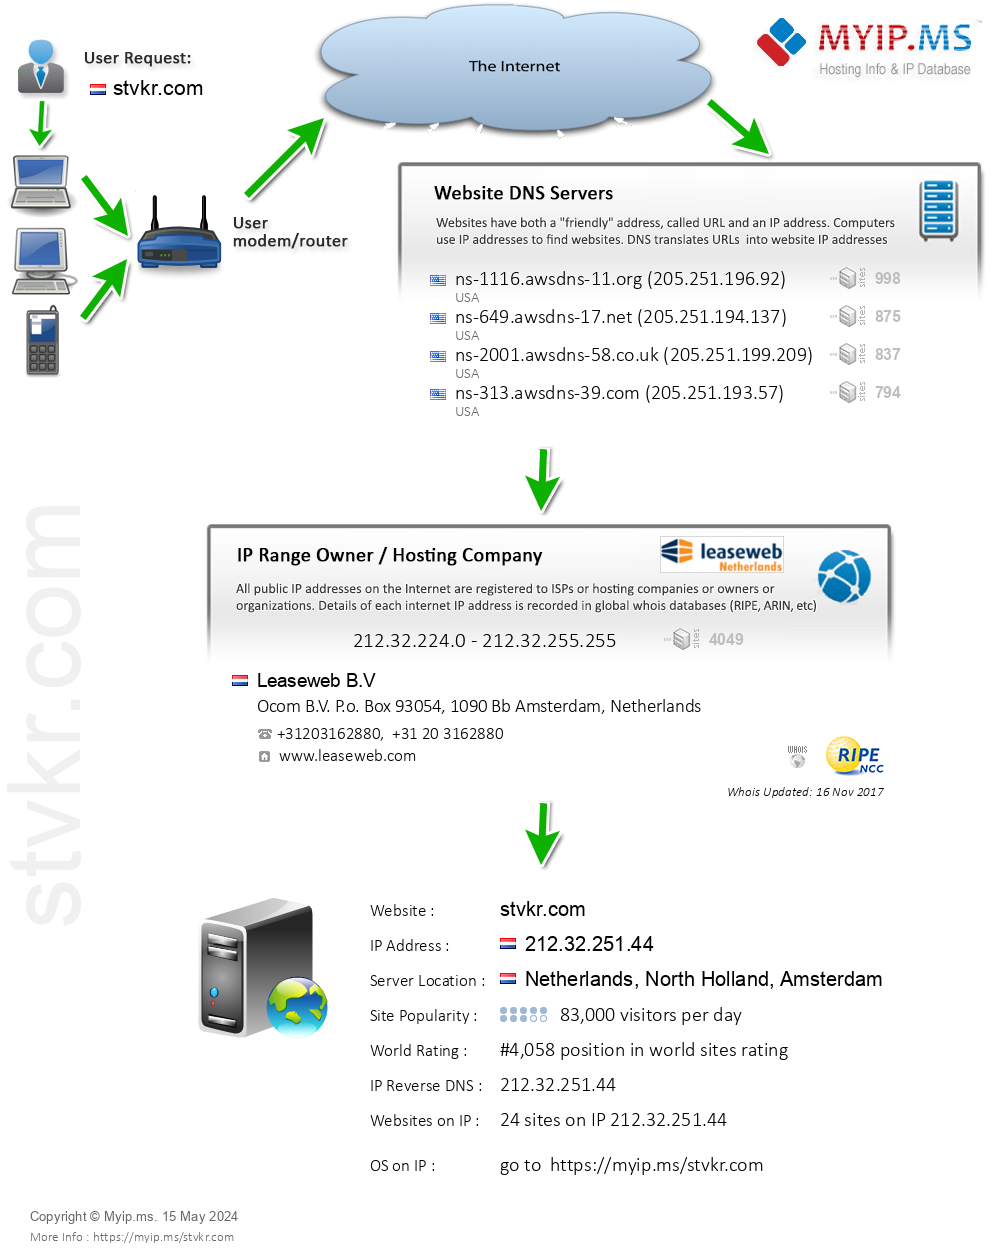 Stvkr.com - Website Hosting Visual IP Diagram